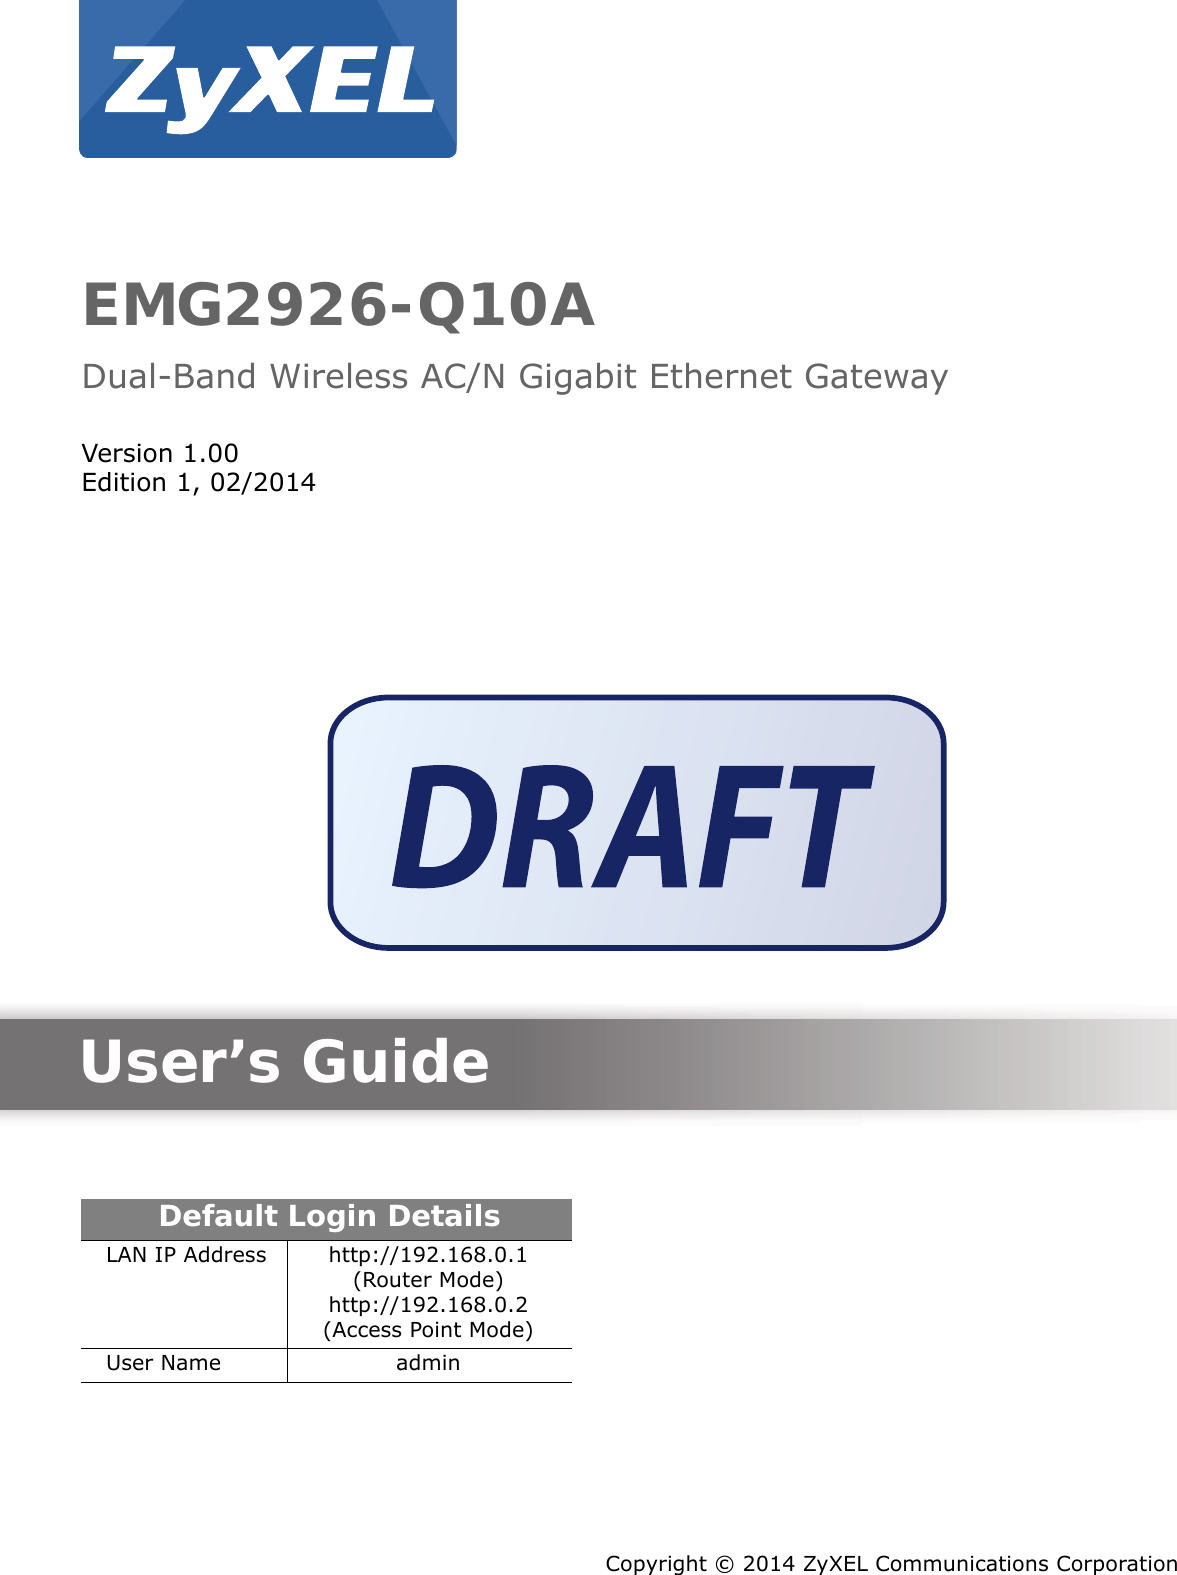 Quick Start Guidewww.zyxel.comEMG2926-Q10ADual-Band Wireless AC/N Gigabit Ethernet GatewayVersion 1.00Edition 1, 02/2014Copyright © 2014 ZyXEL Communications CorporationUser’s GuideDefault Login DetailsLAN IP Address http://192.168.0.1 (Router Mode)http://192.168.0.2 (Access Point Mode)User Name admin